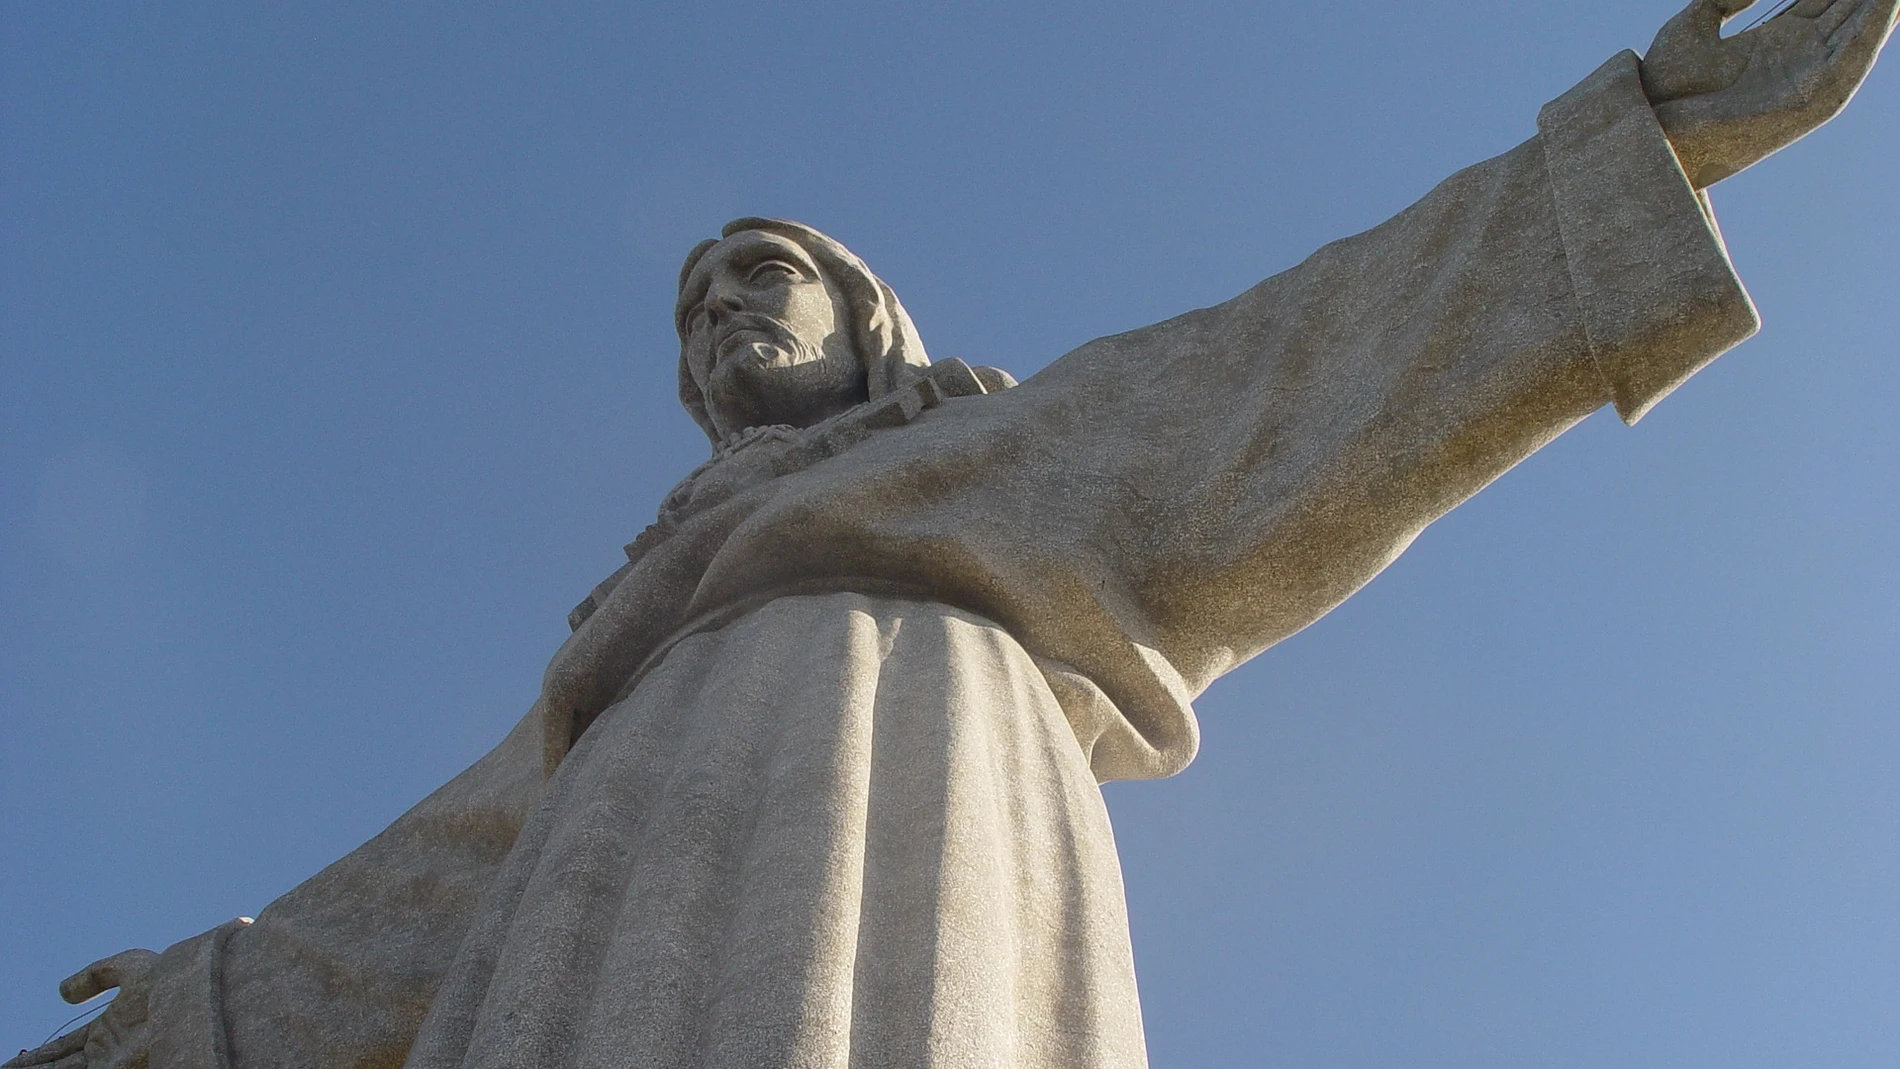 Detalle de la escultura del Cristo Rey de Lisboa.